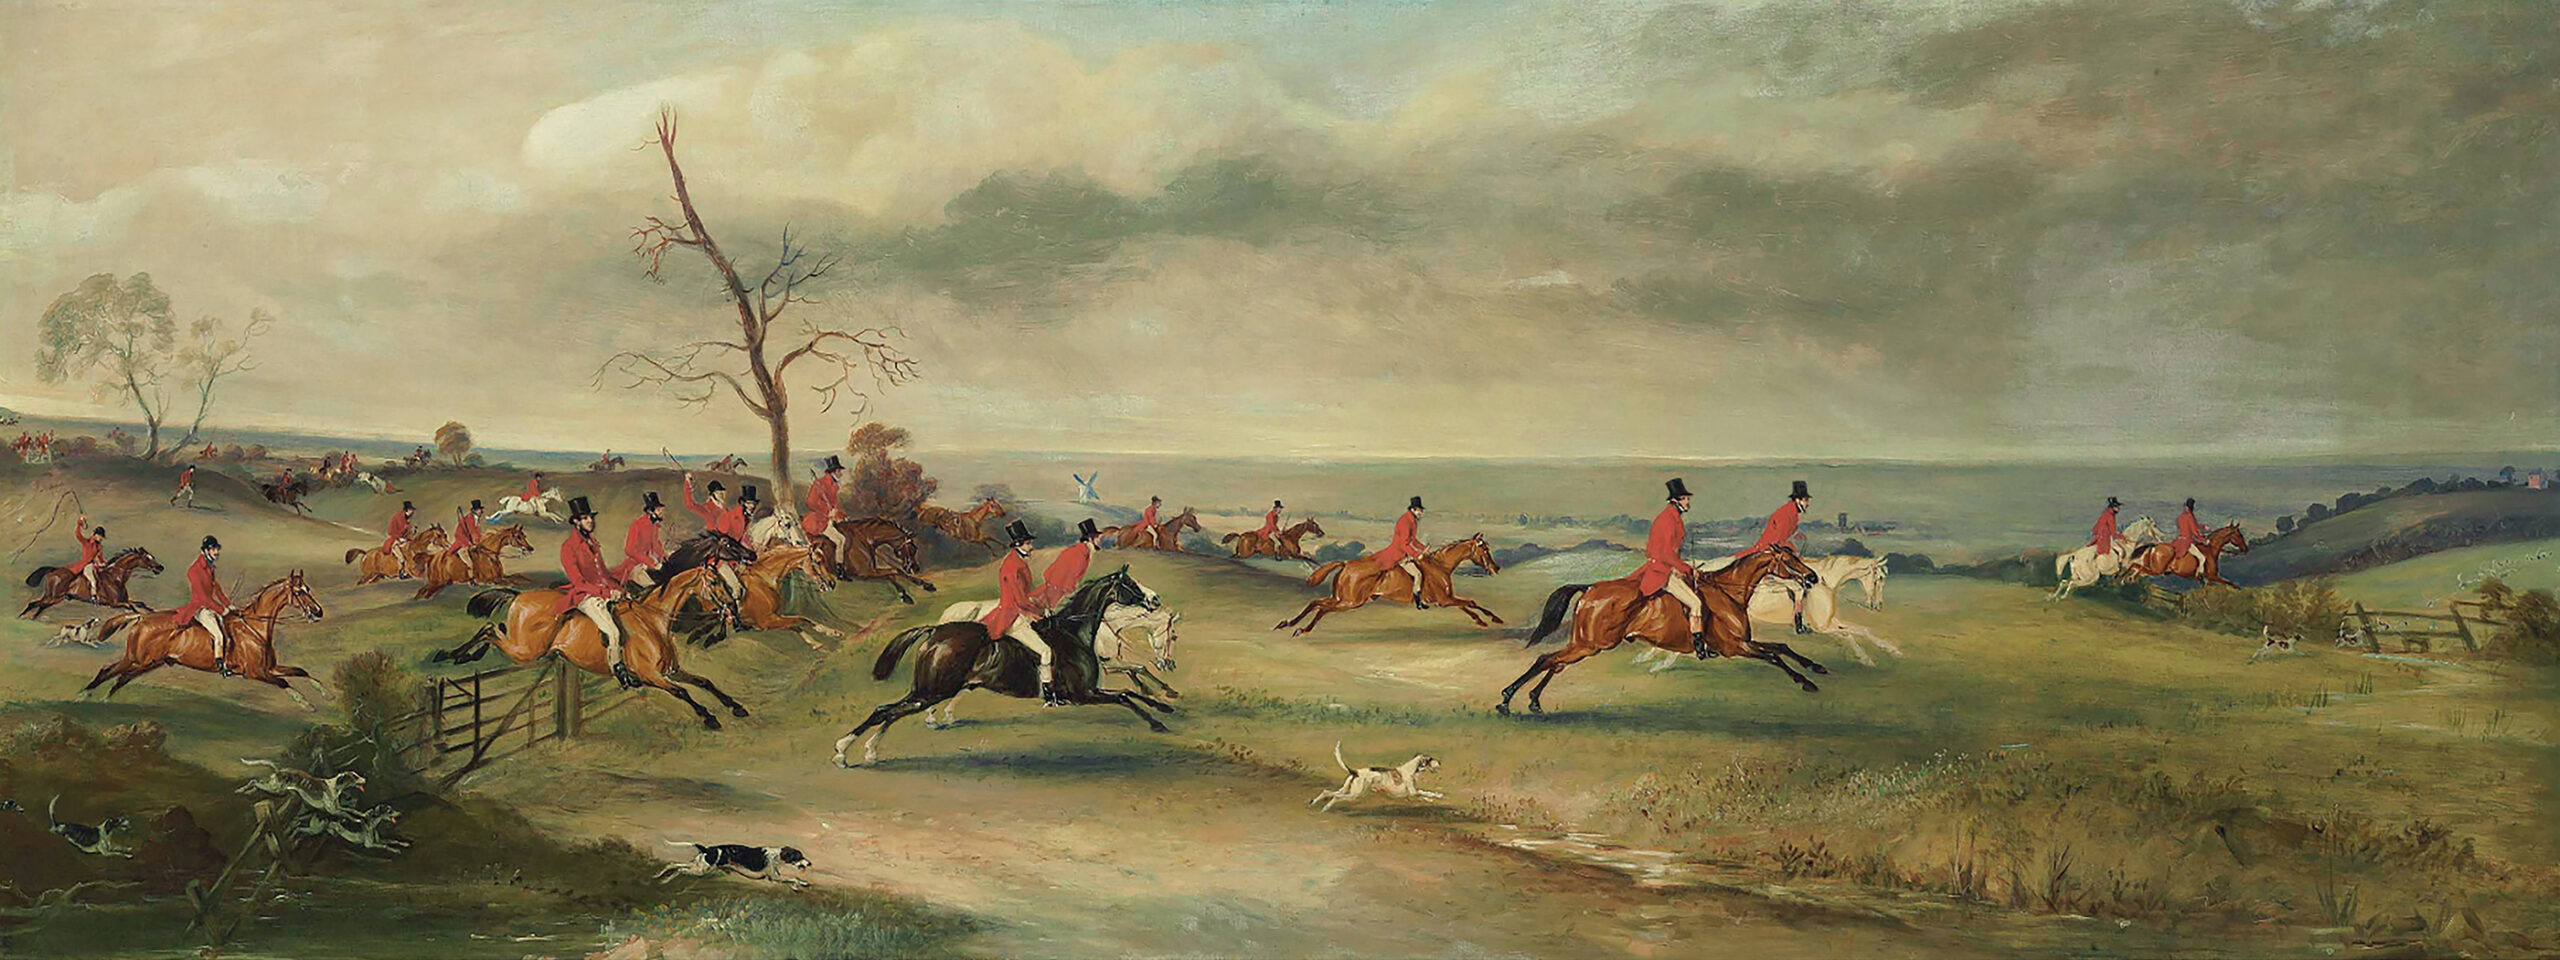 Equestrian/Fox Equestrian Fox Hunt Landscape Scene Framed Oil Painting Print on Canvas